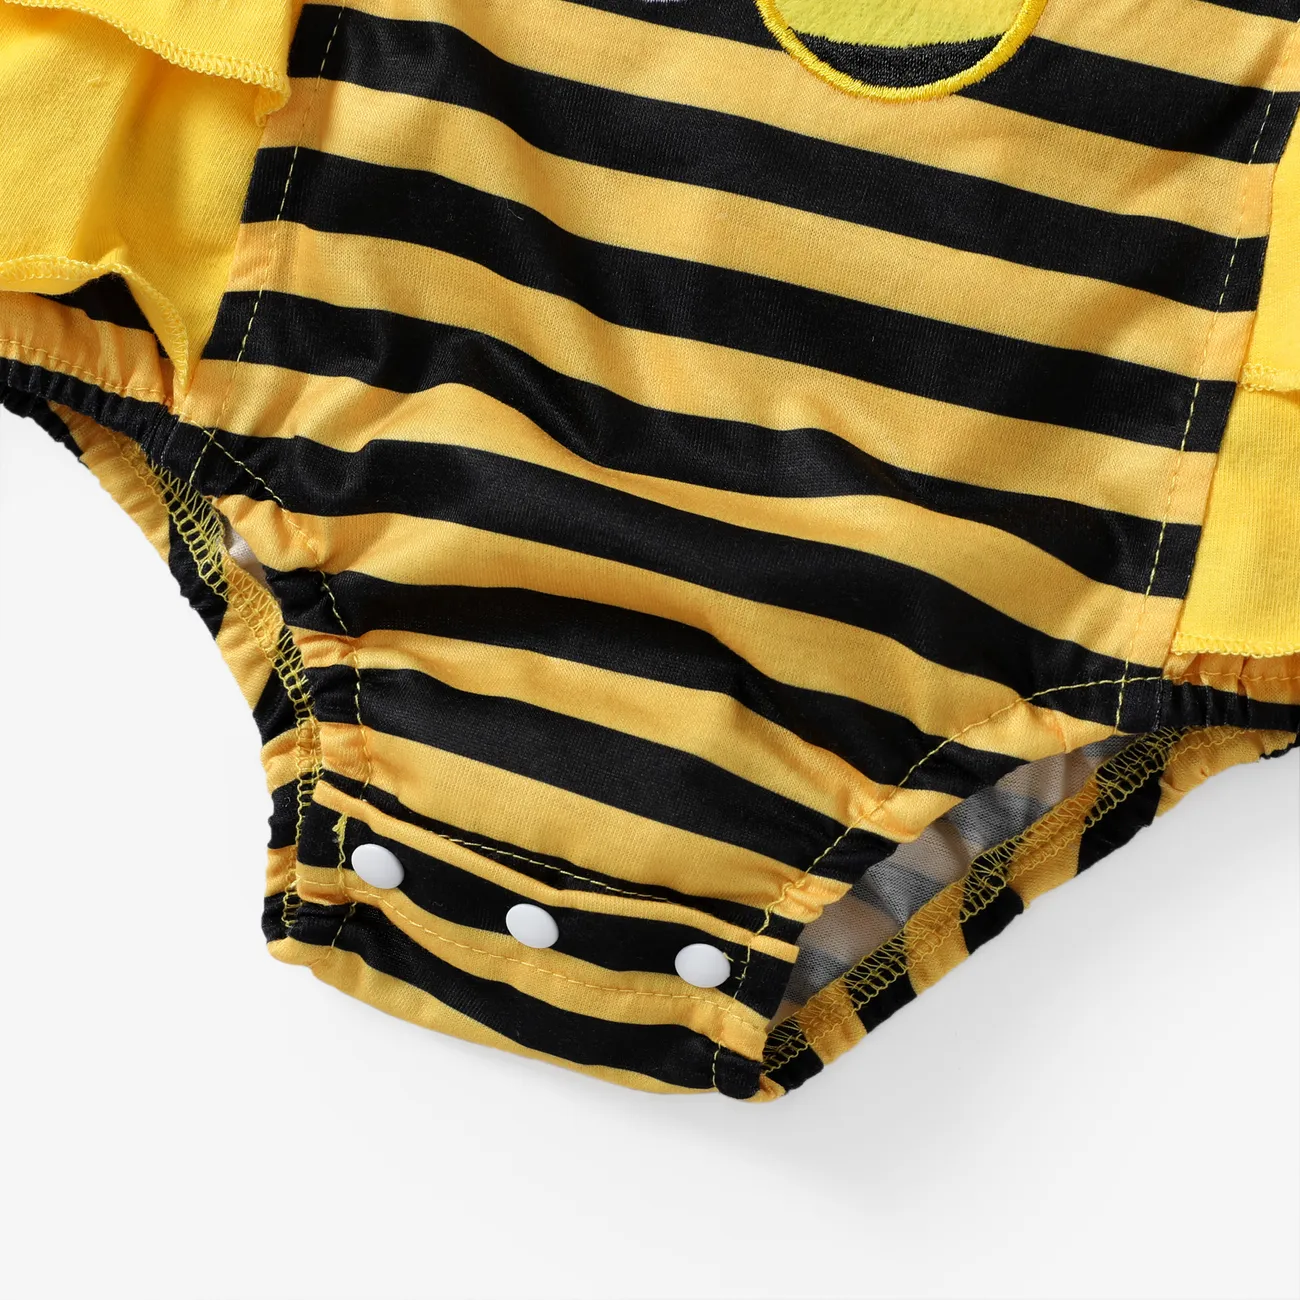 2pcs Baby Girls Marine Flutter Sleeve Romper Set Yellow big image 1